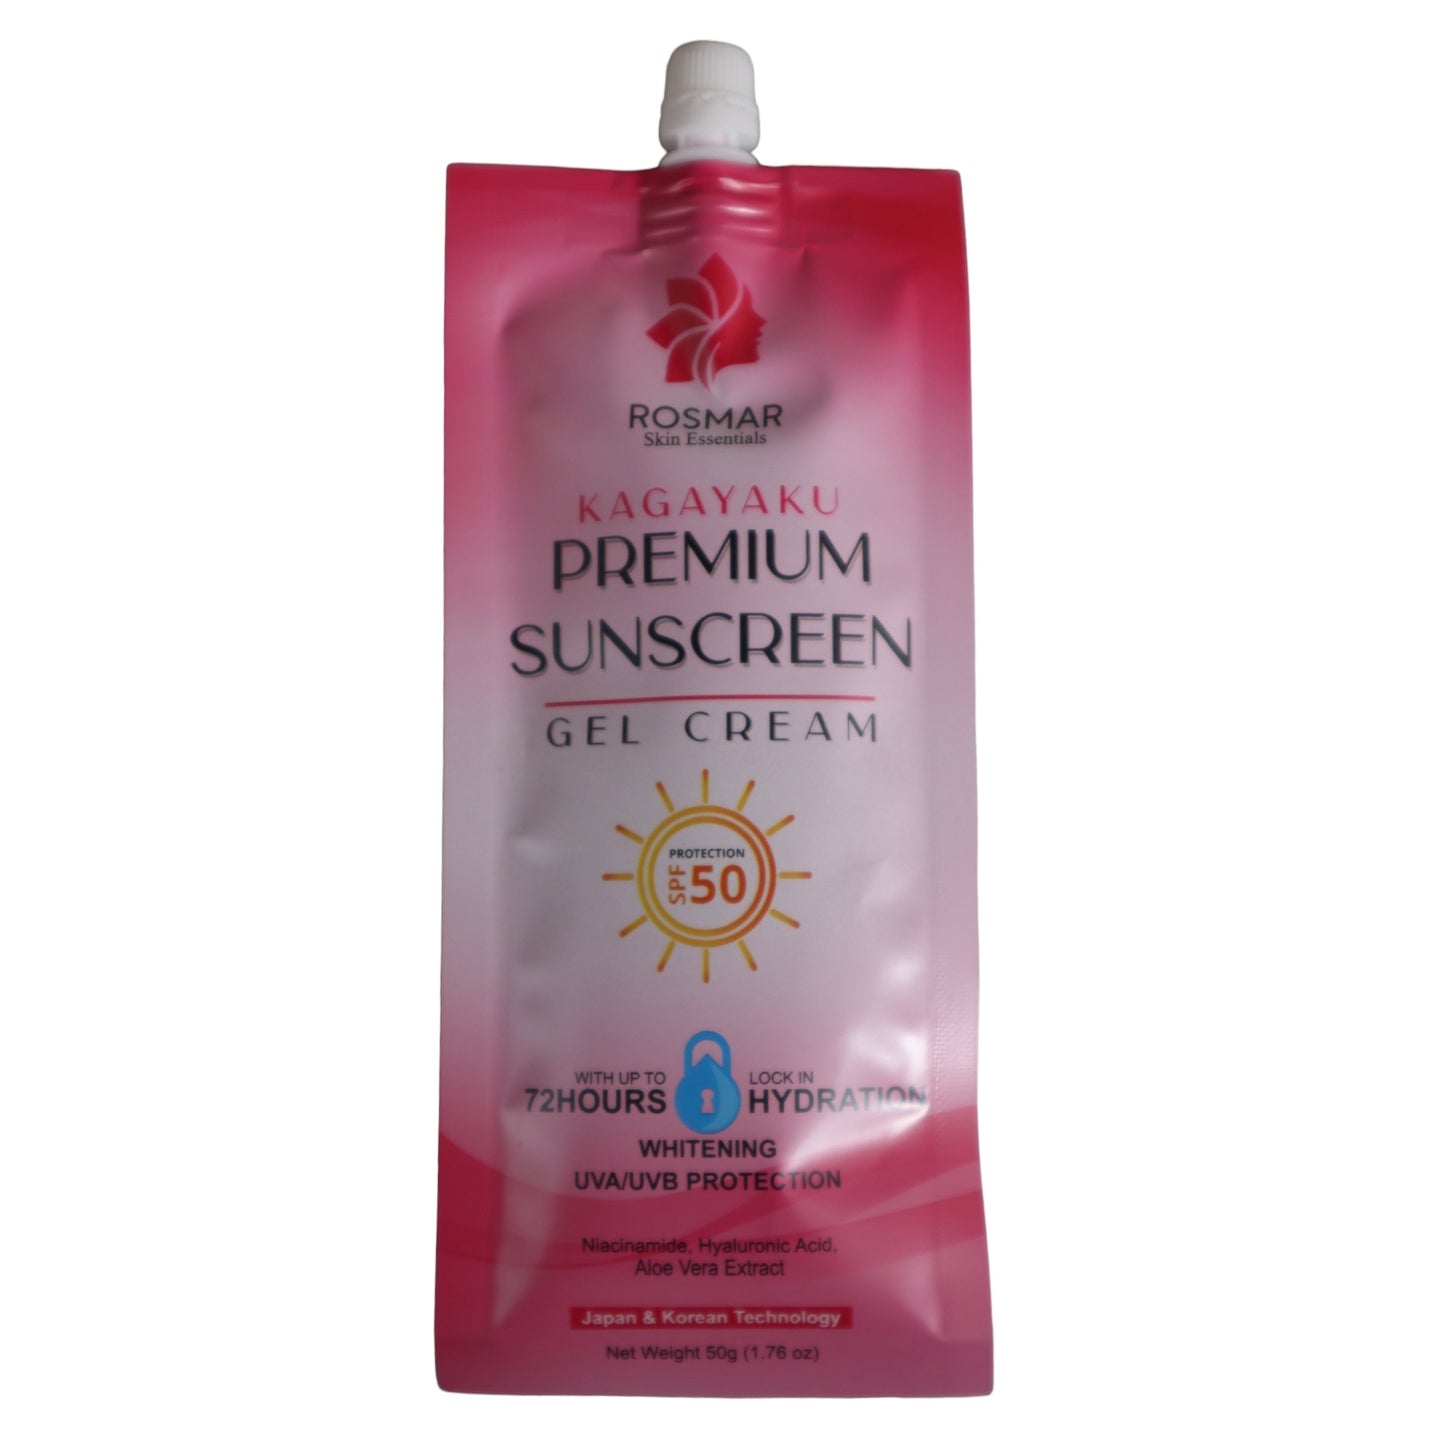 Rosmar Kagayaku Premium Sunscreen Gel Cream 50g